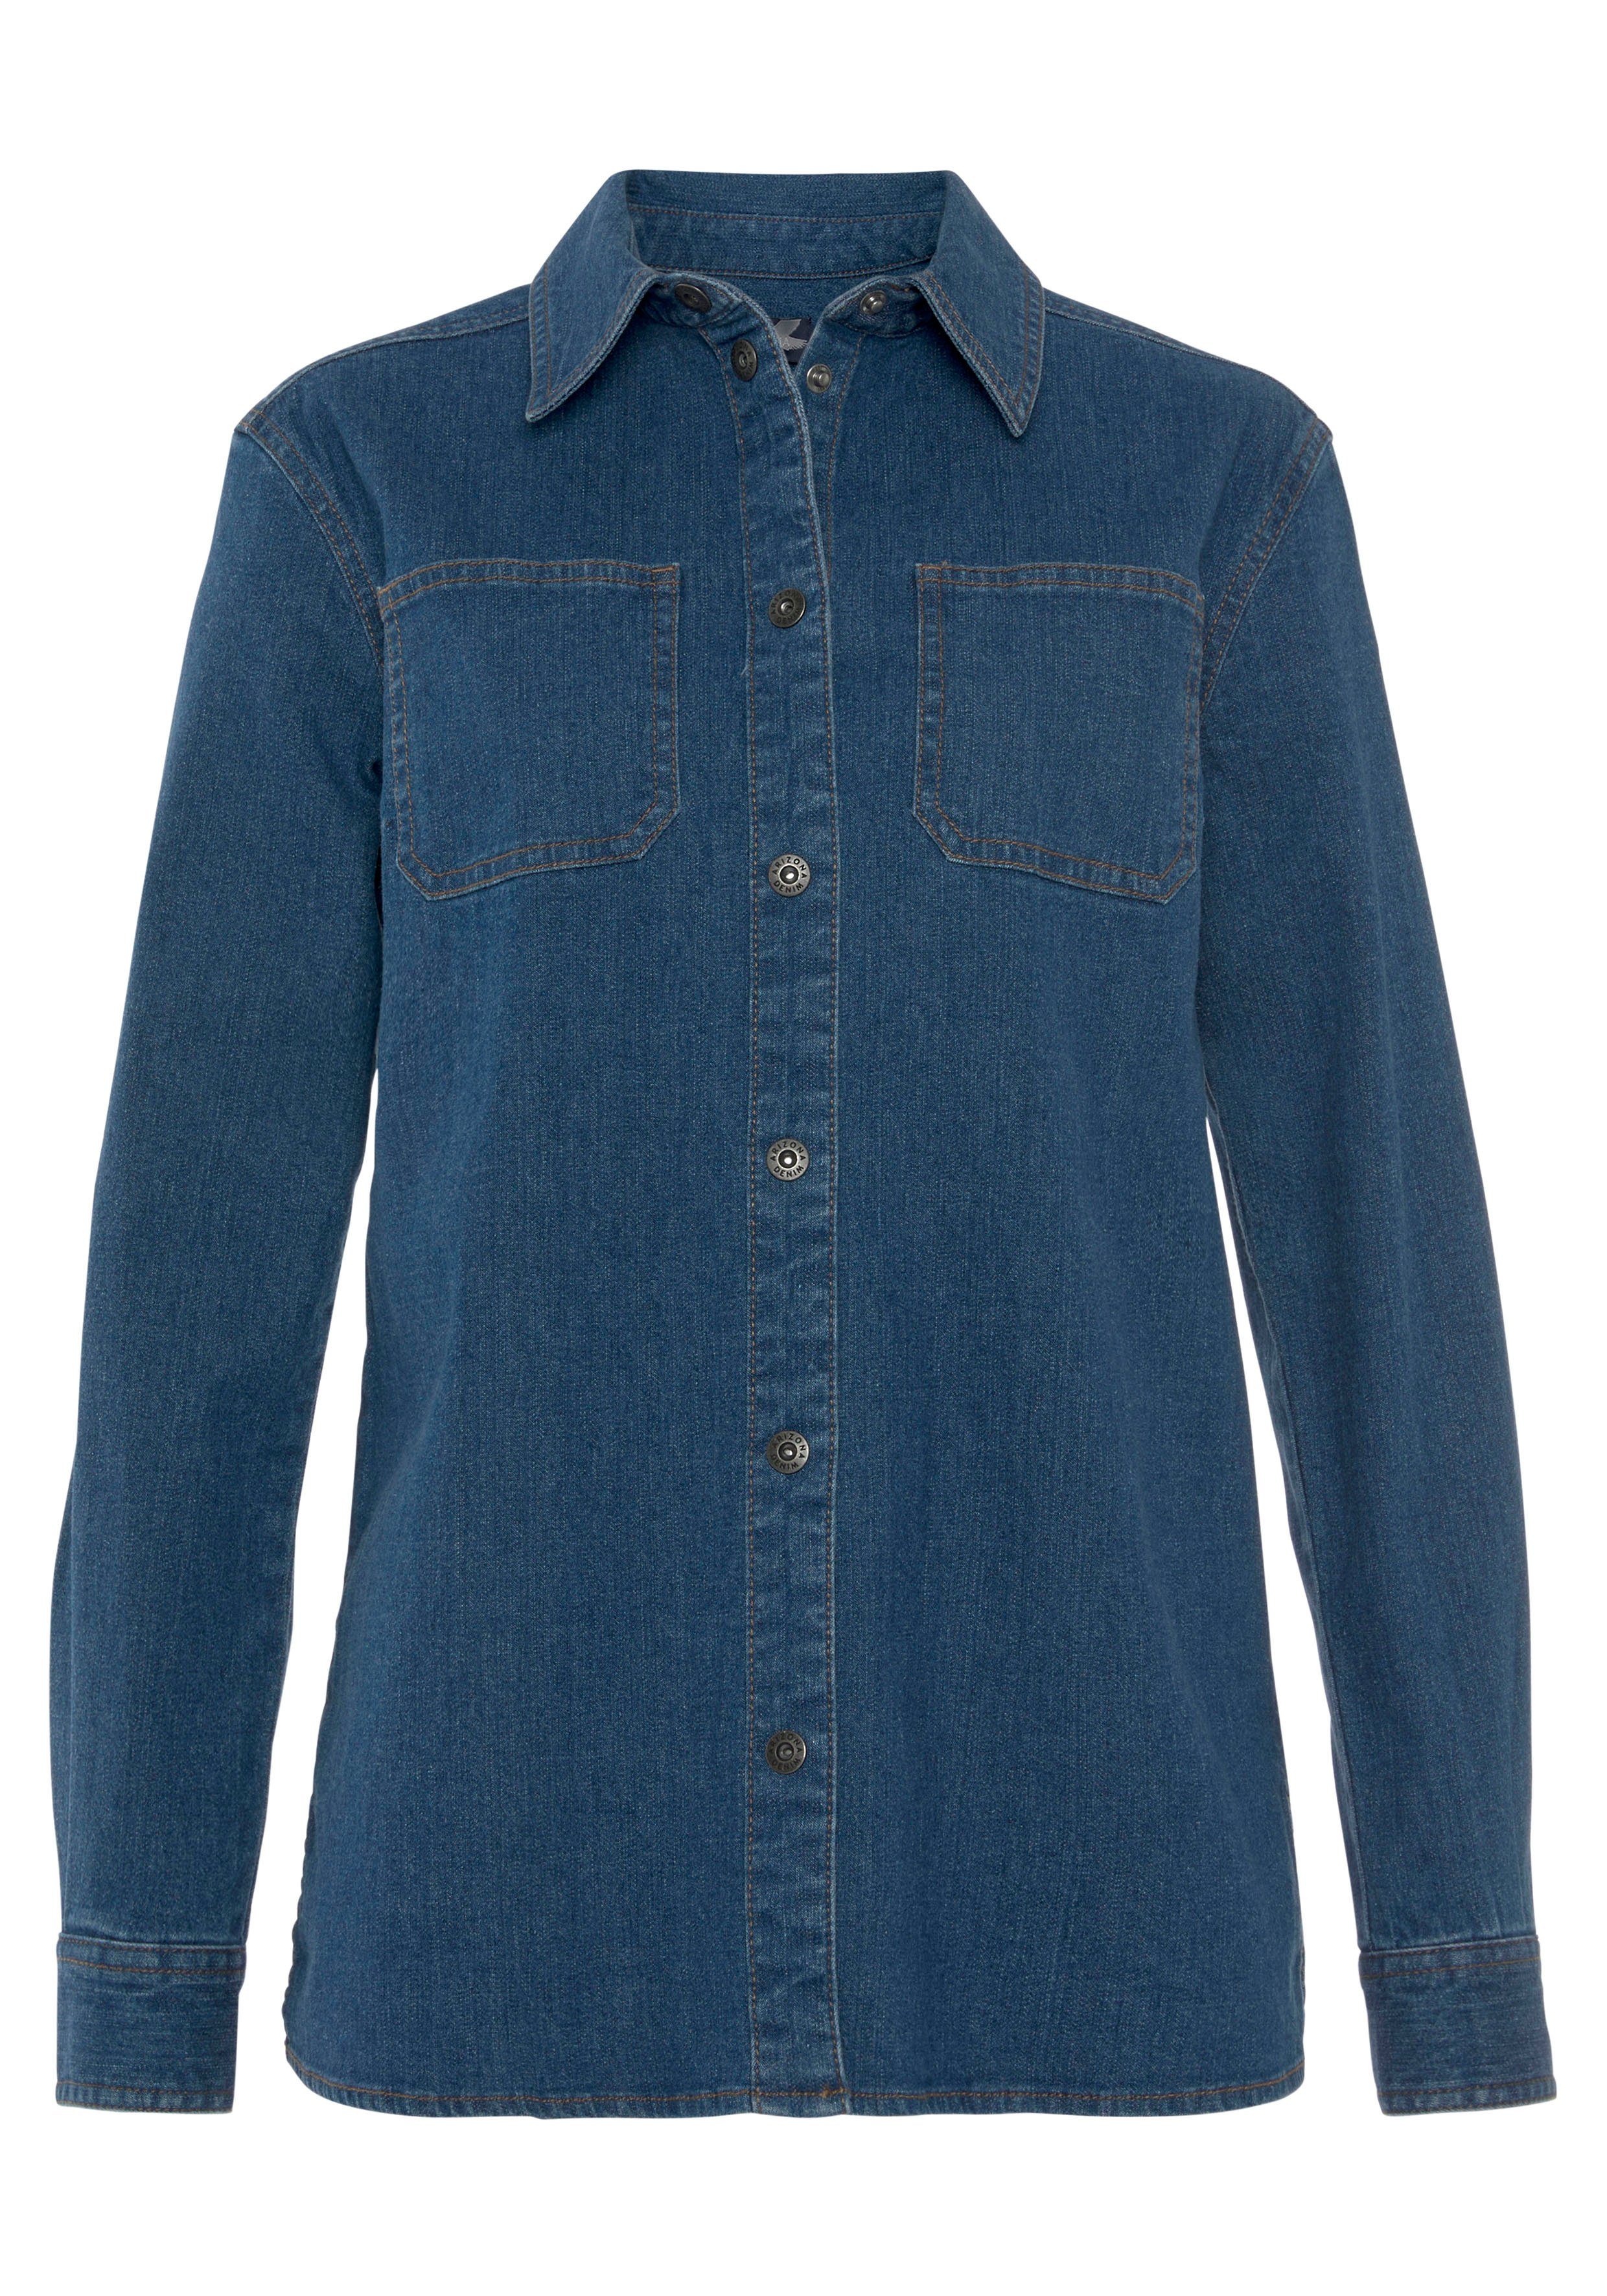 Jeansjacke geschnitten - Arizona Weiter Hemdjacke dark used Denim blue Shacket